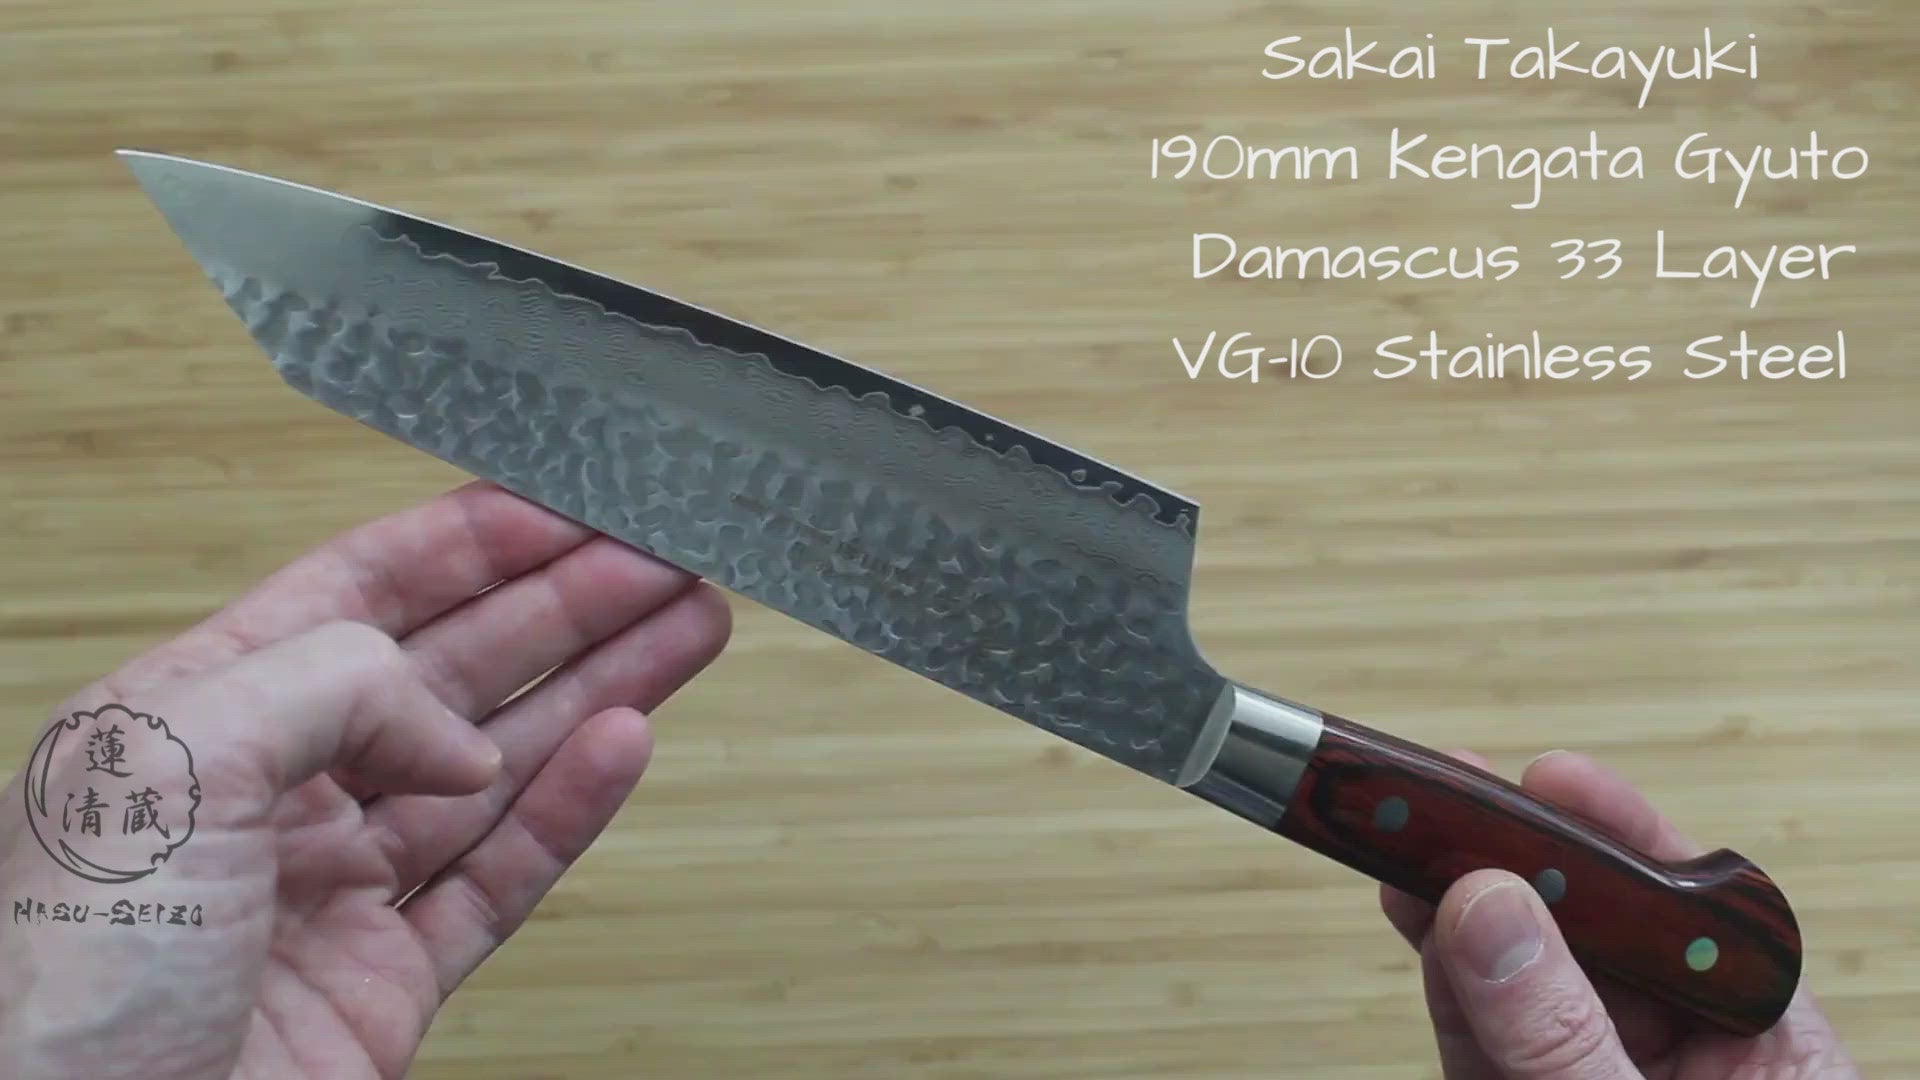 Kengata Gyuto Japanese Chef Knife 190mm (7.5") Damascus 33 Layer Sakai Takayuki by Hasu-Seizo